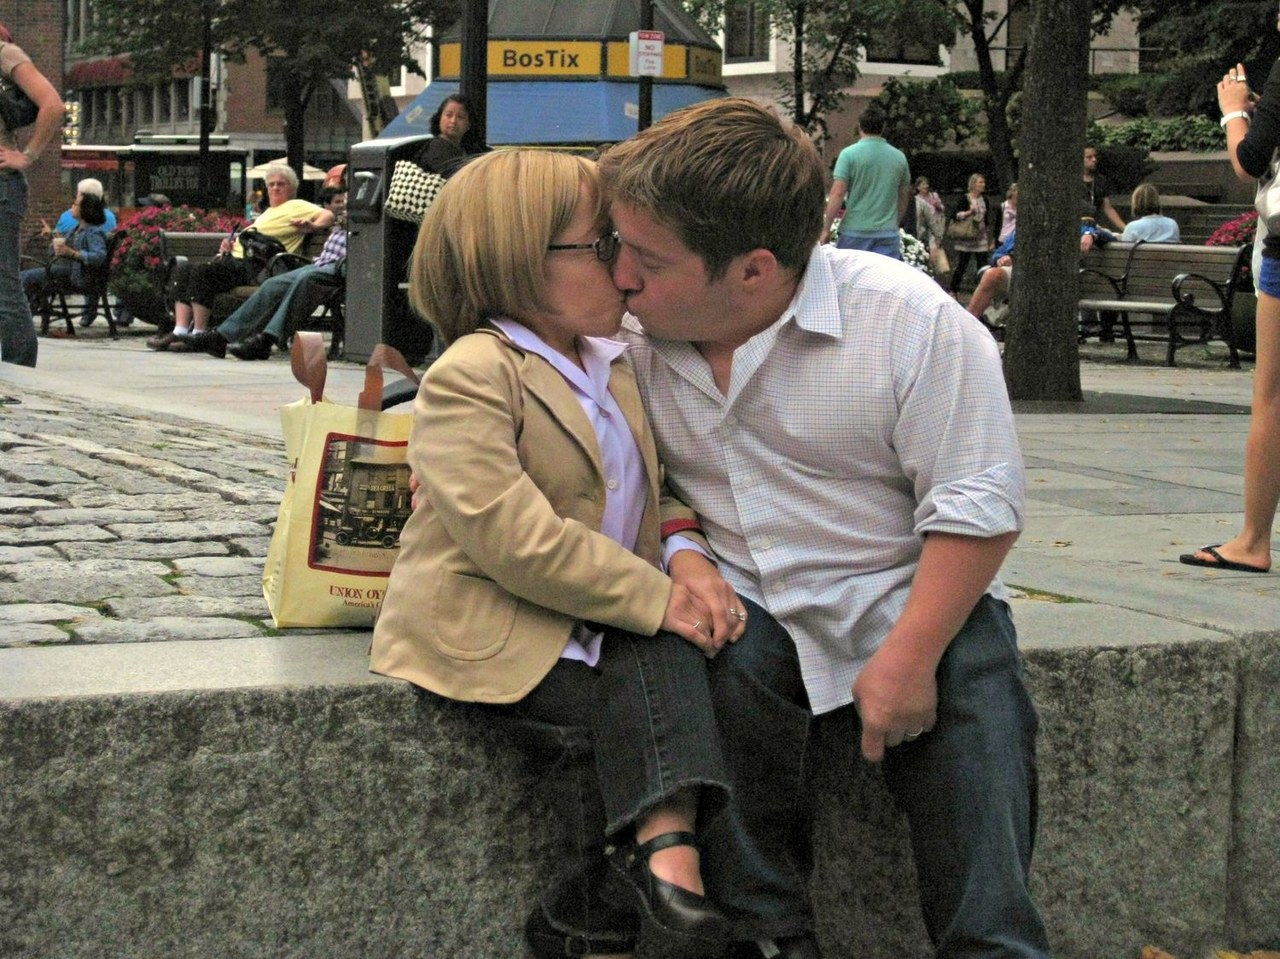 cuenta jen the little couple kissing